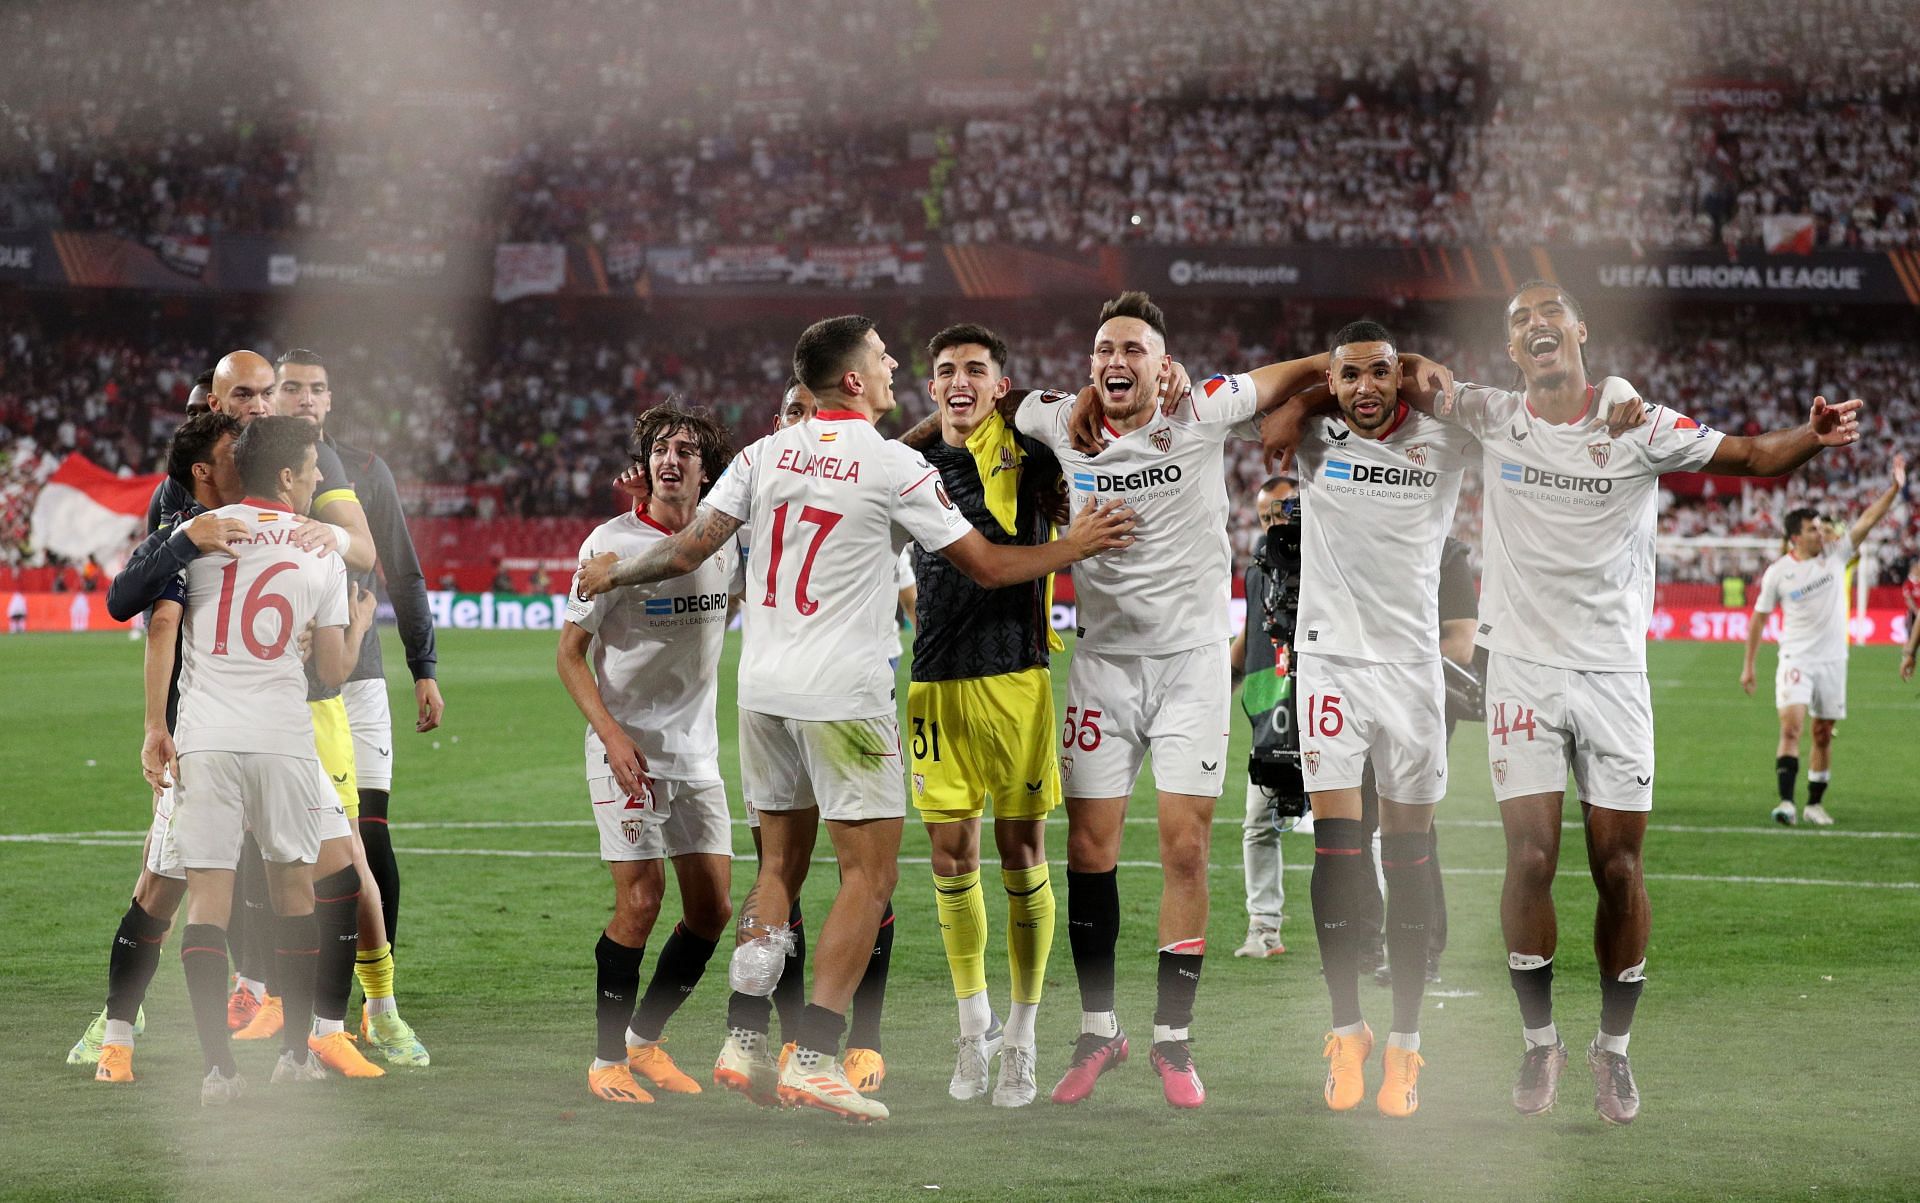 Sevilla kick on in the Europa League.